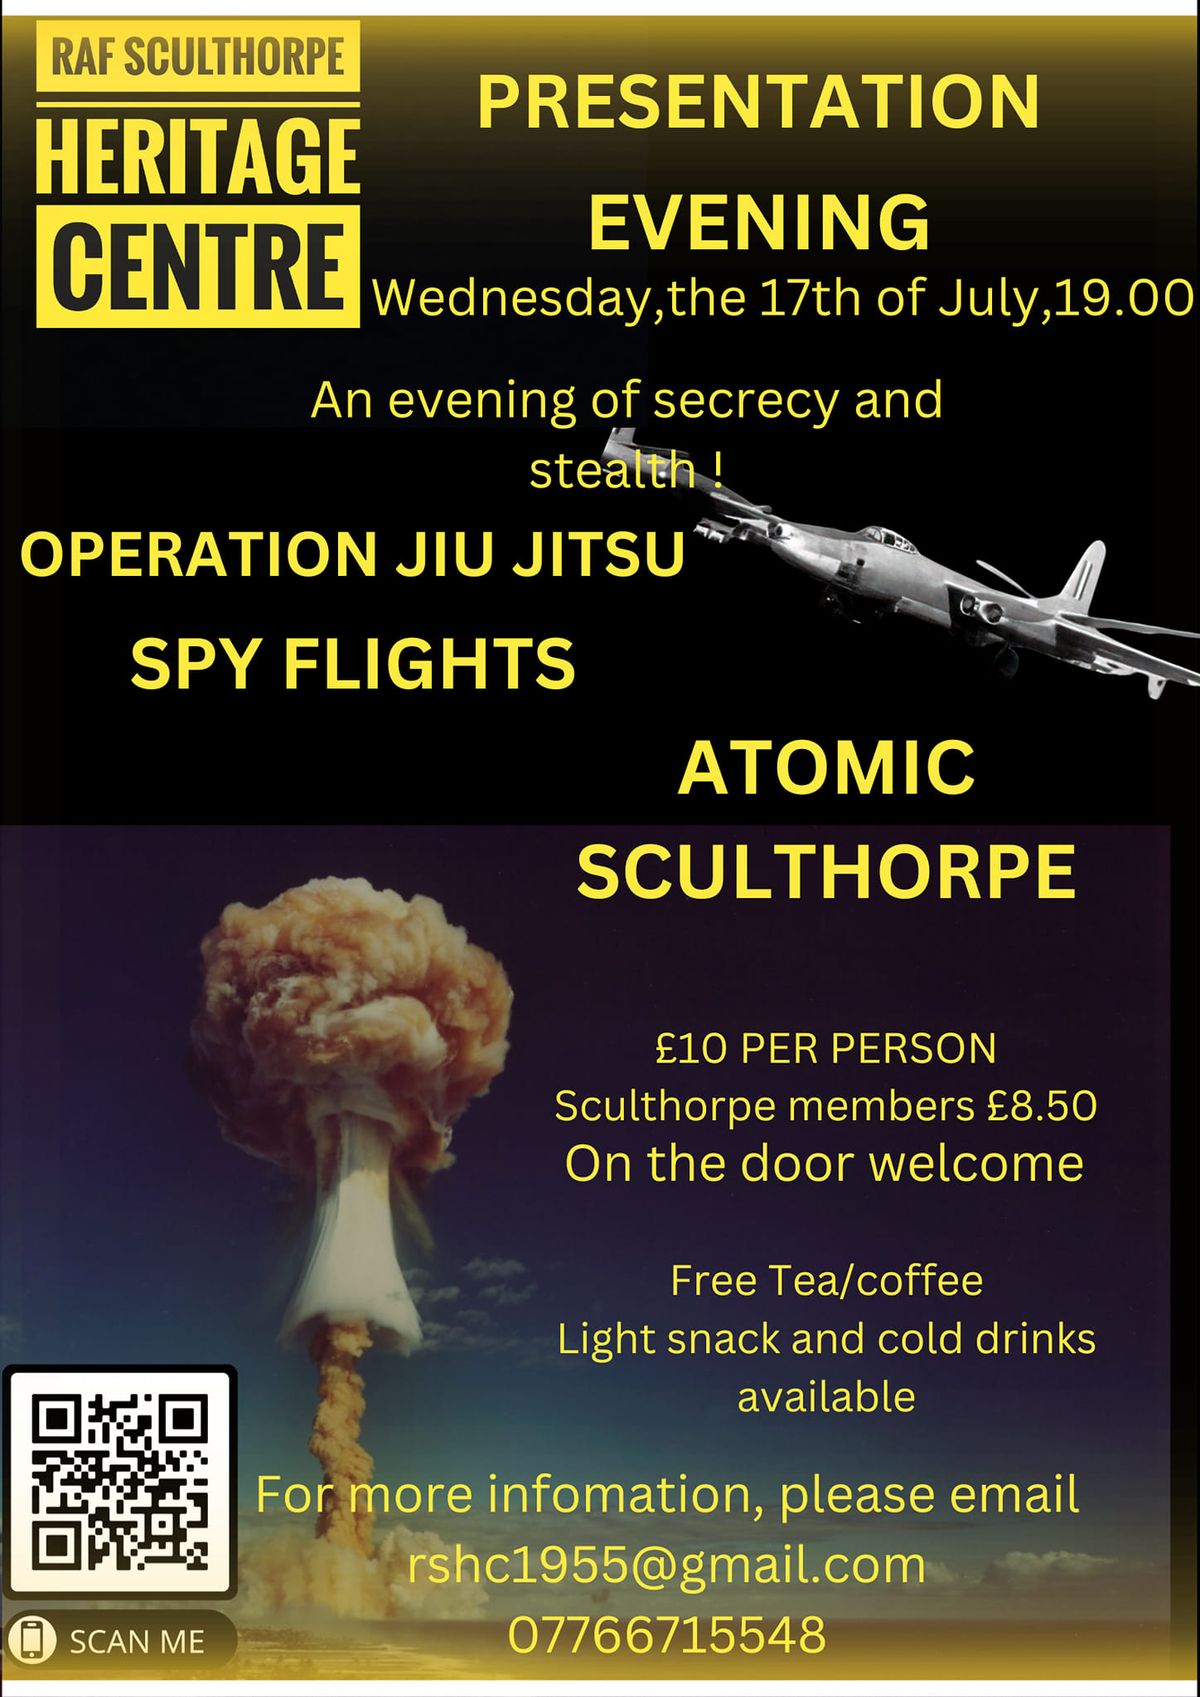 RAF Sculthorpe Heritage Centre Presentation Evening.